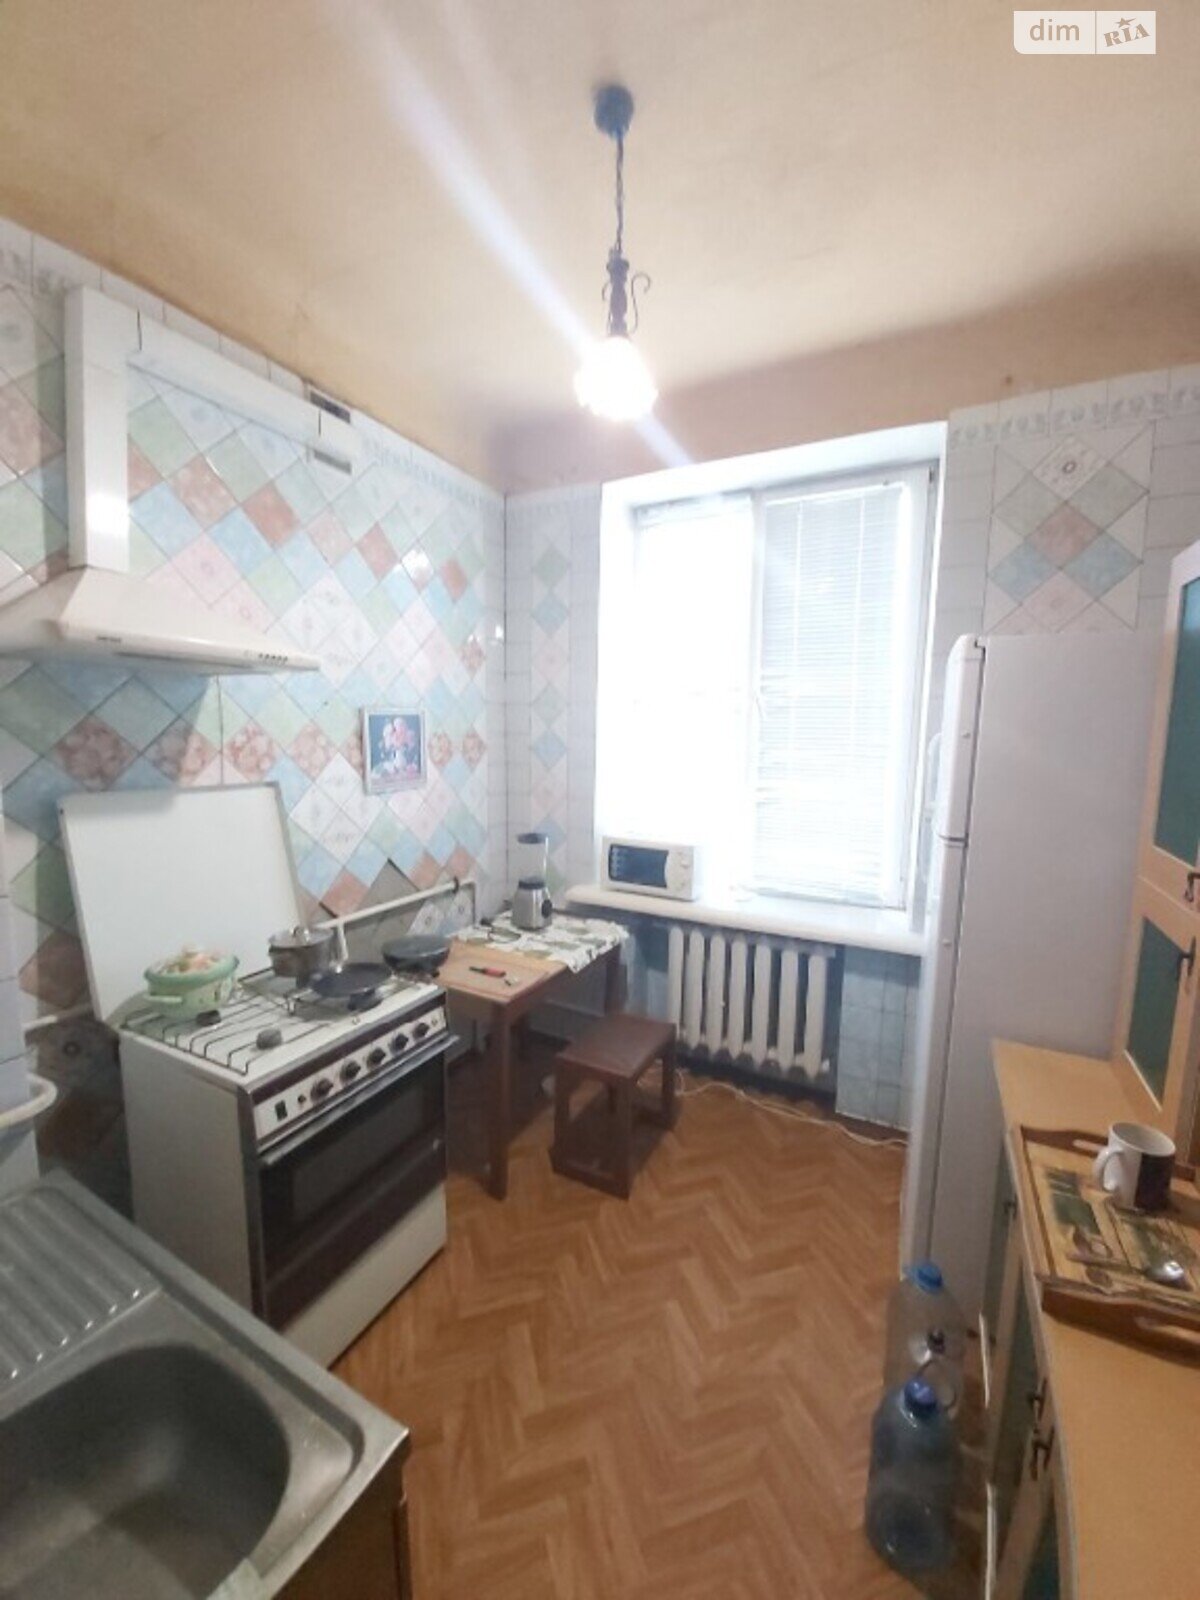 Продажа двухкомнатной квартиры в Харькове, на ул. Бакулина, район Центр фото 1